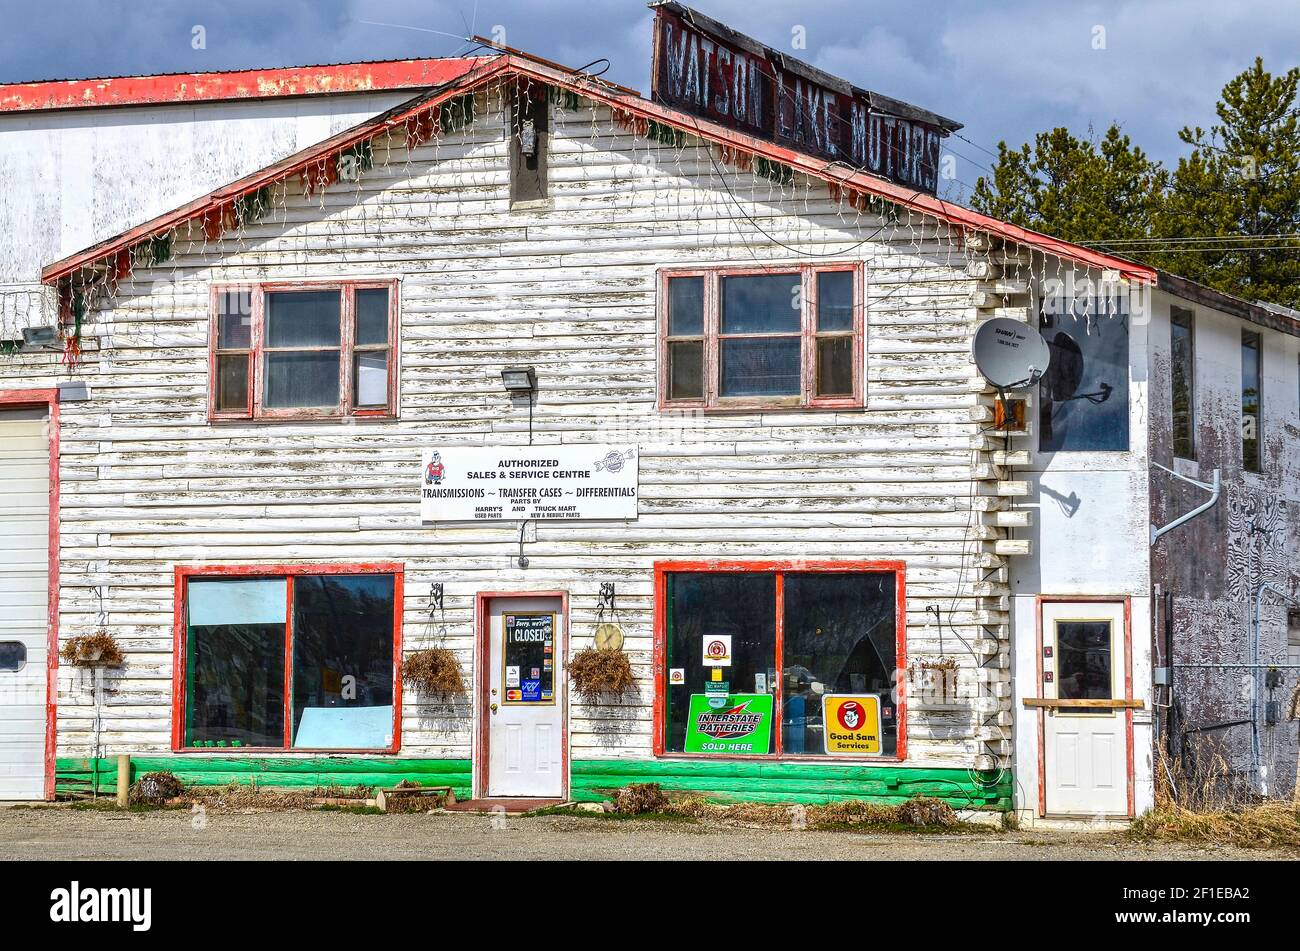 WATSON LAKE, YUKON, CANADA - MAY 19, 2012: Old gas station on Alaska Highway, Watson Lake, near the famous Sign Post Forest Stock Photo